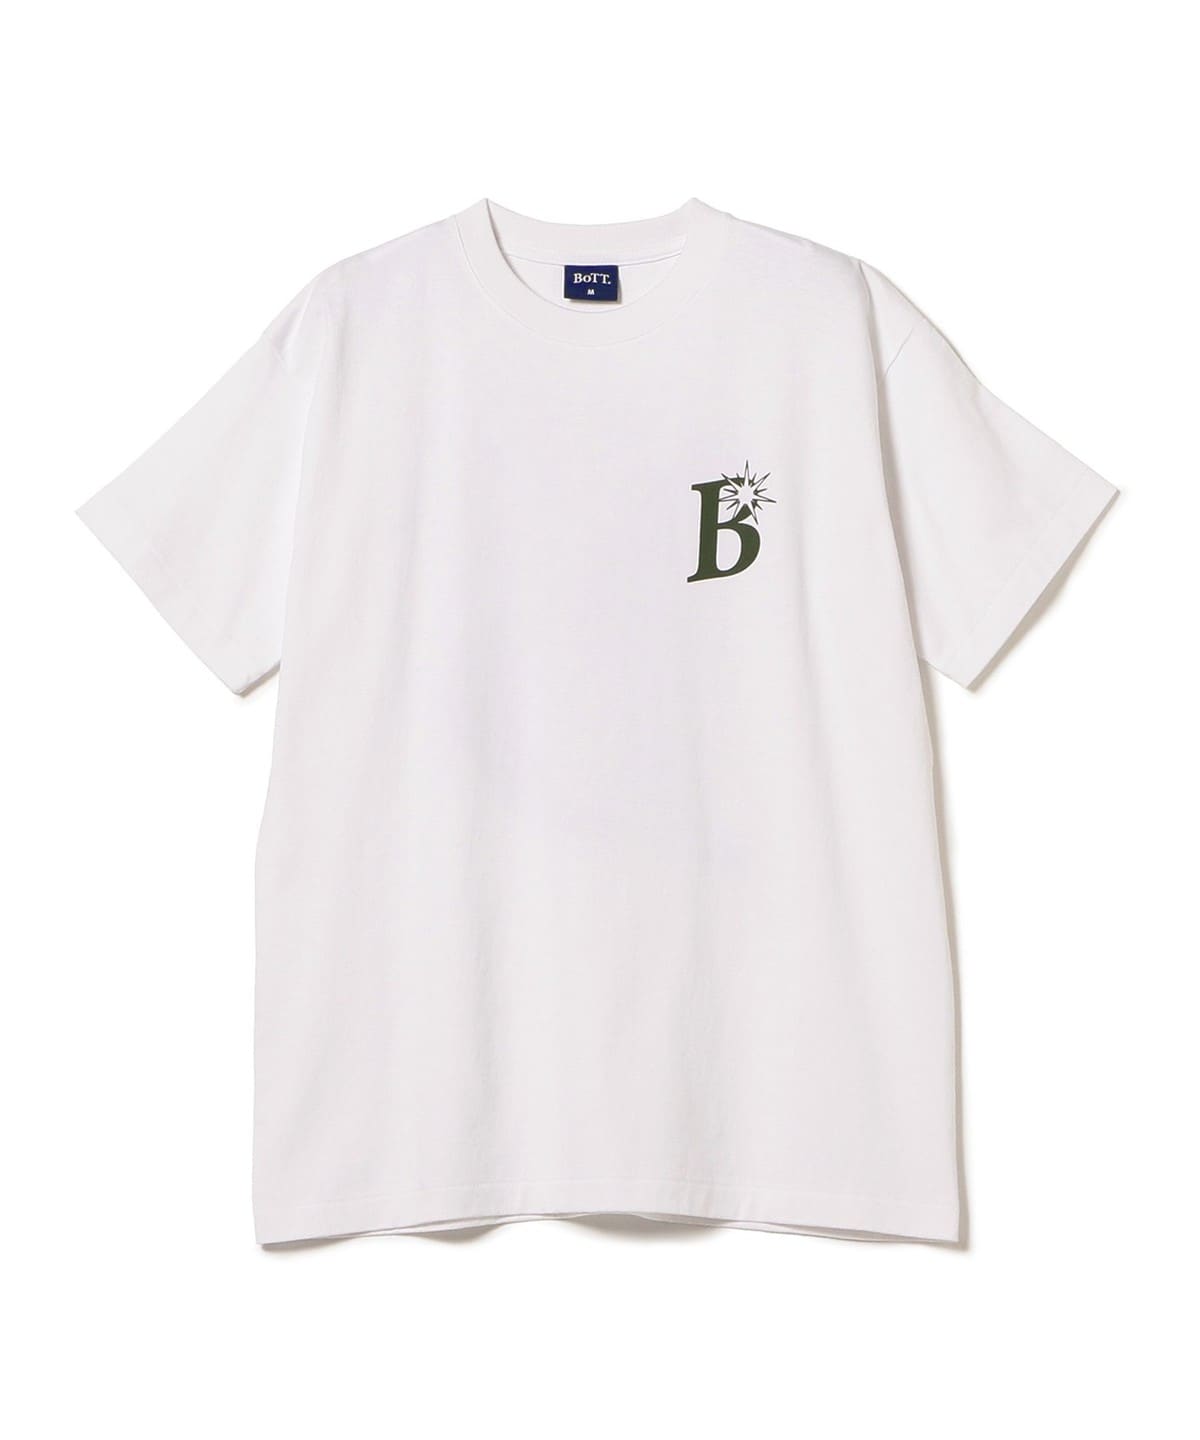 Lサイズ 白 BoTT ロゴTシャツ bott tee - 通販 - csa.sakura.ne.jp